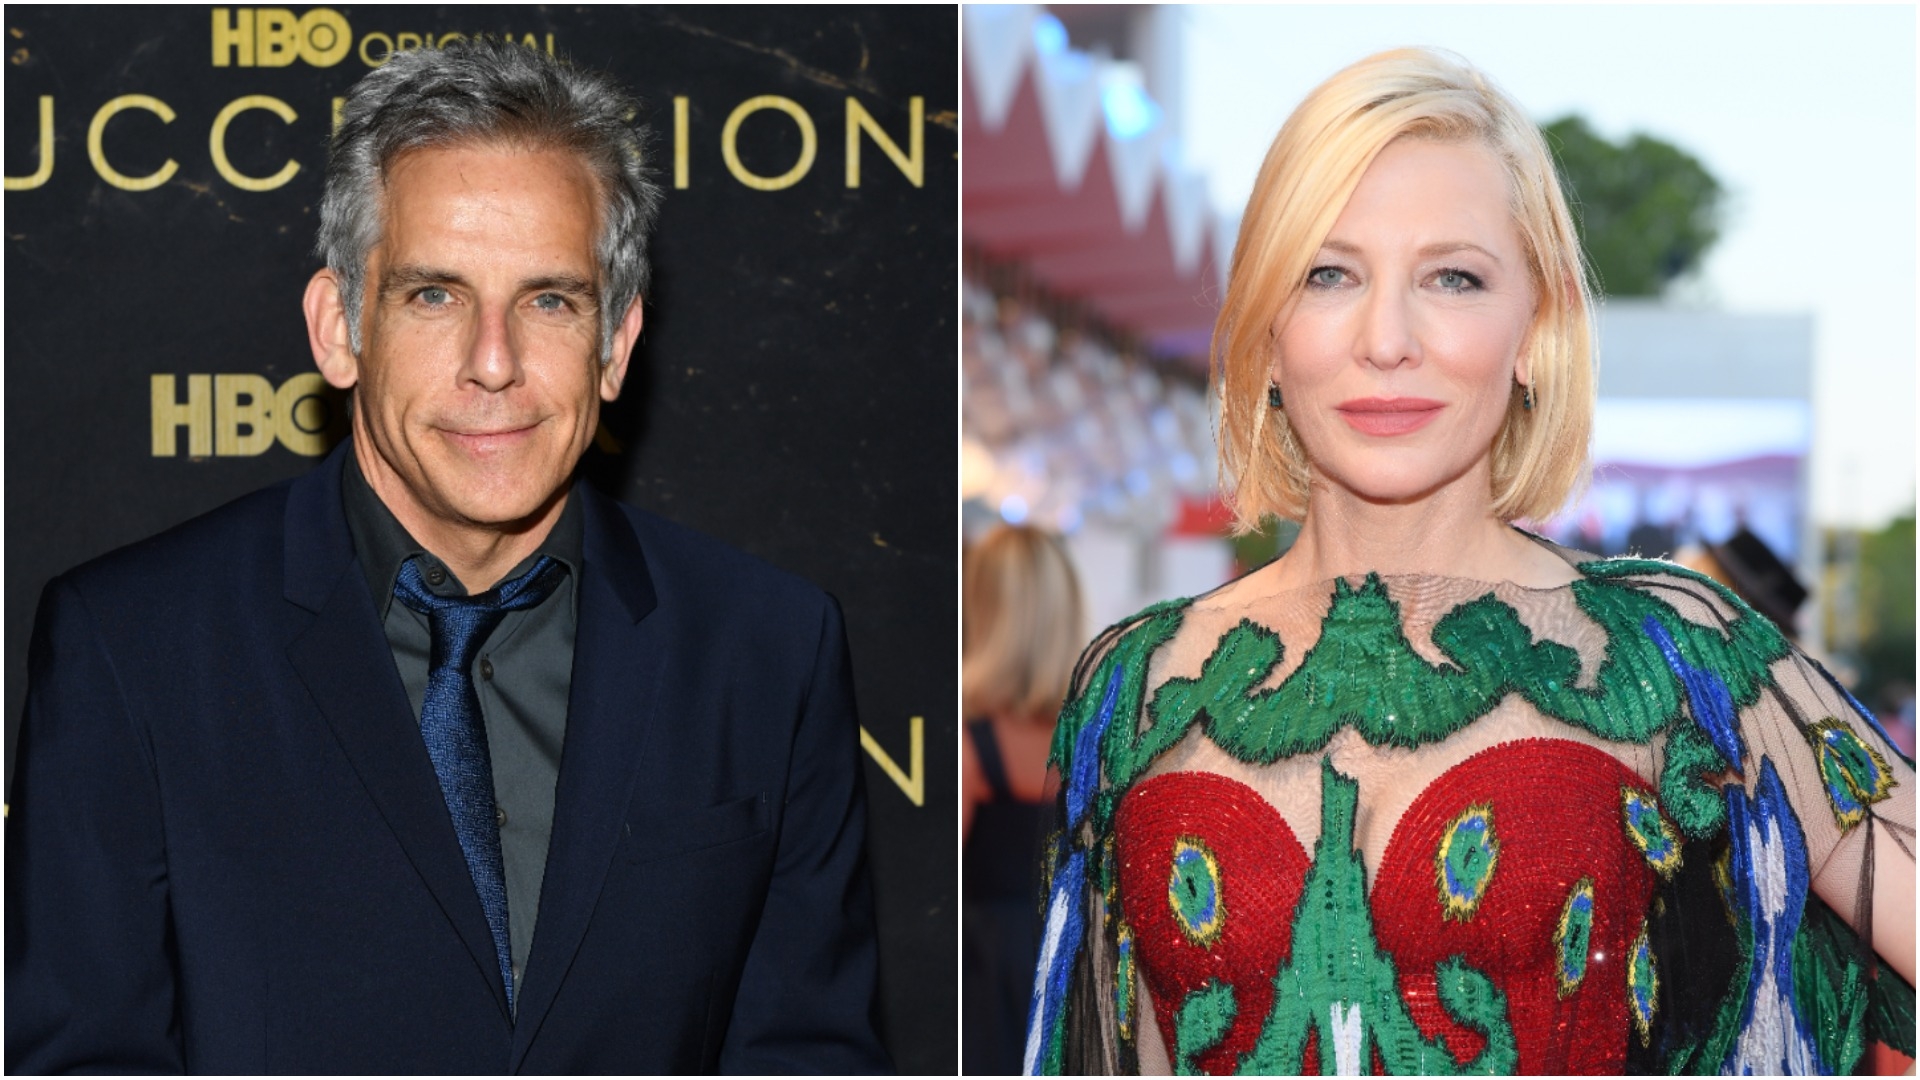 Ben Stiller to star alongside Cate Blanchett in film adaptation of ’60s sci-fi series The Champions